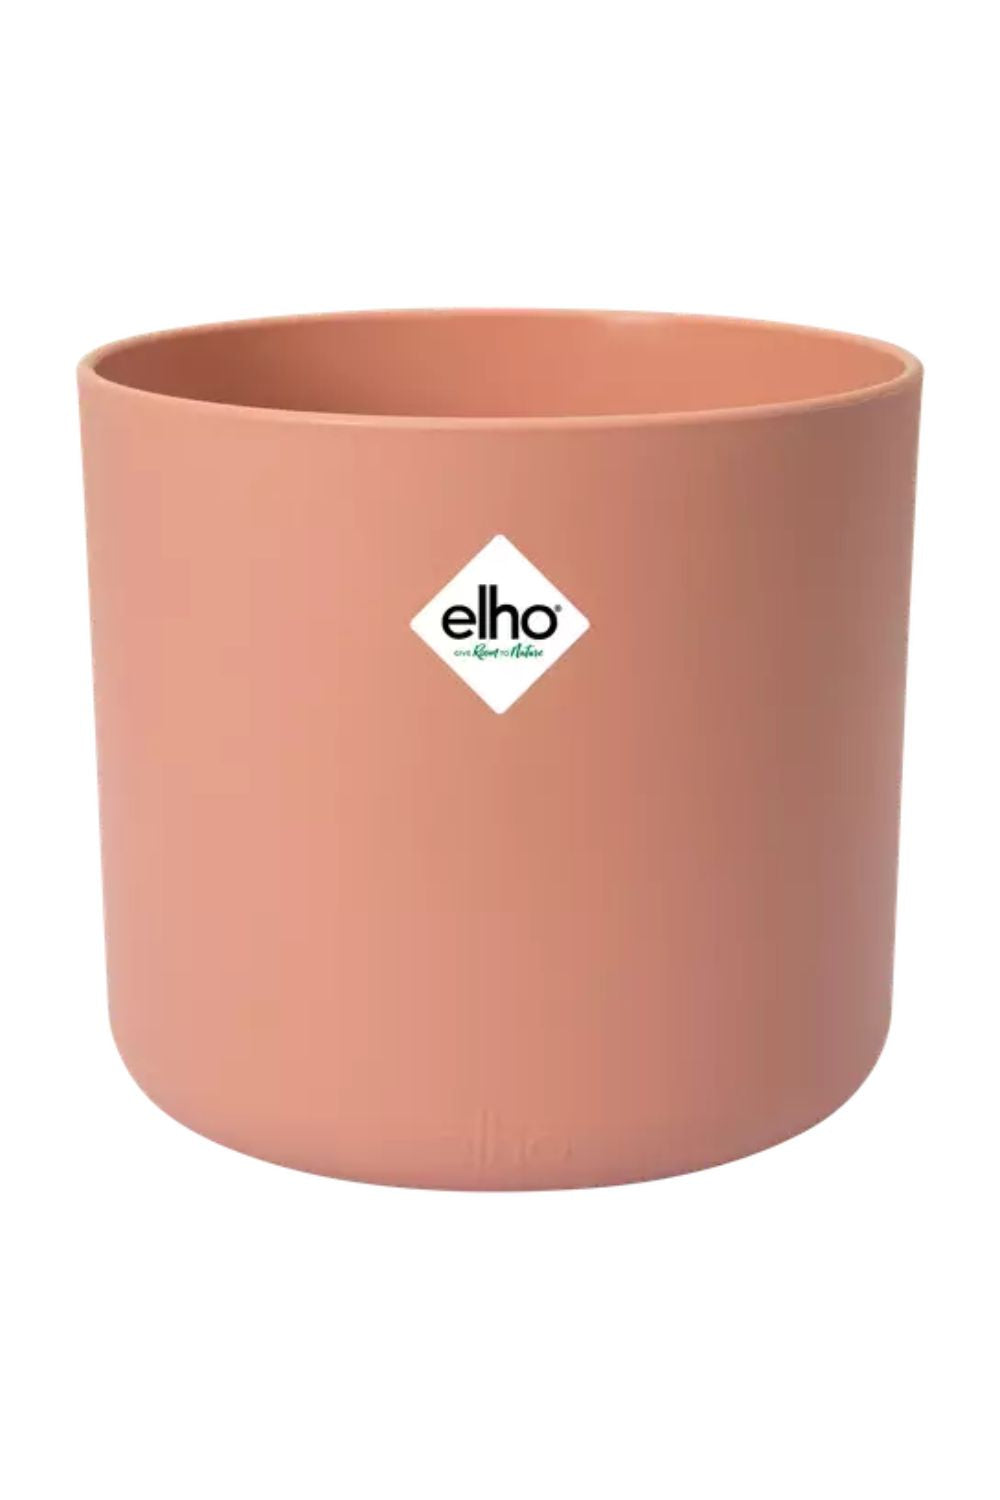 Blumentopf Elho B. for soft rund Delicate Pink 16cm